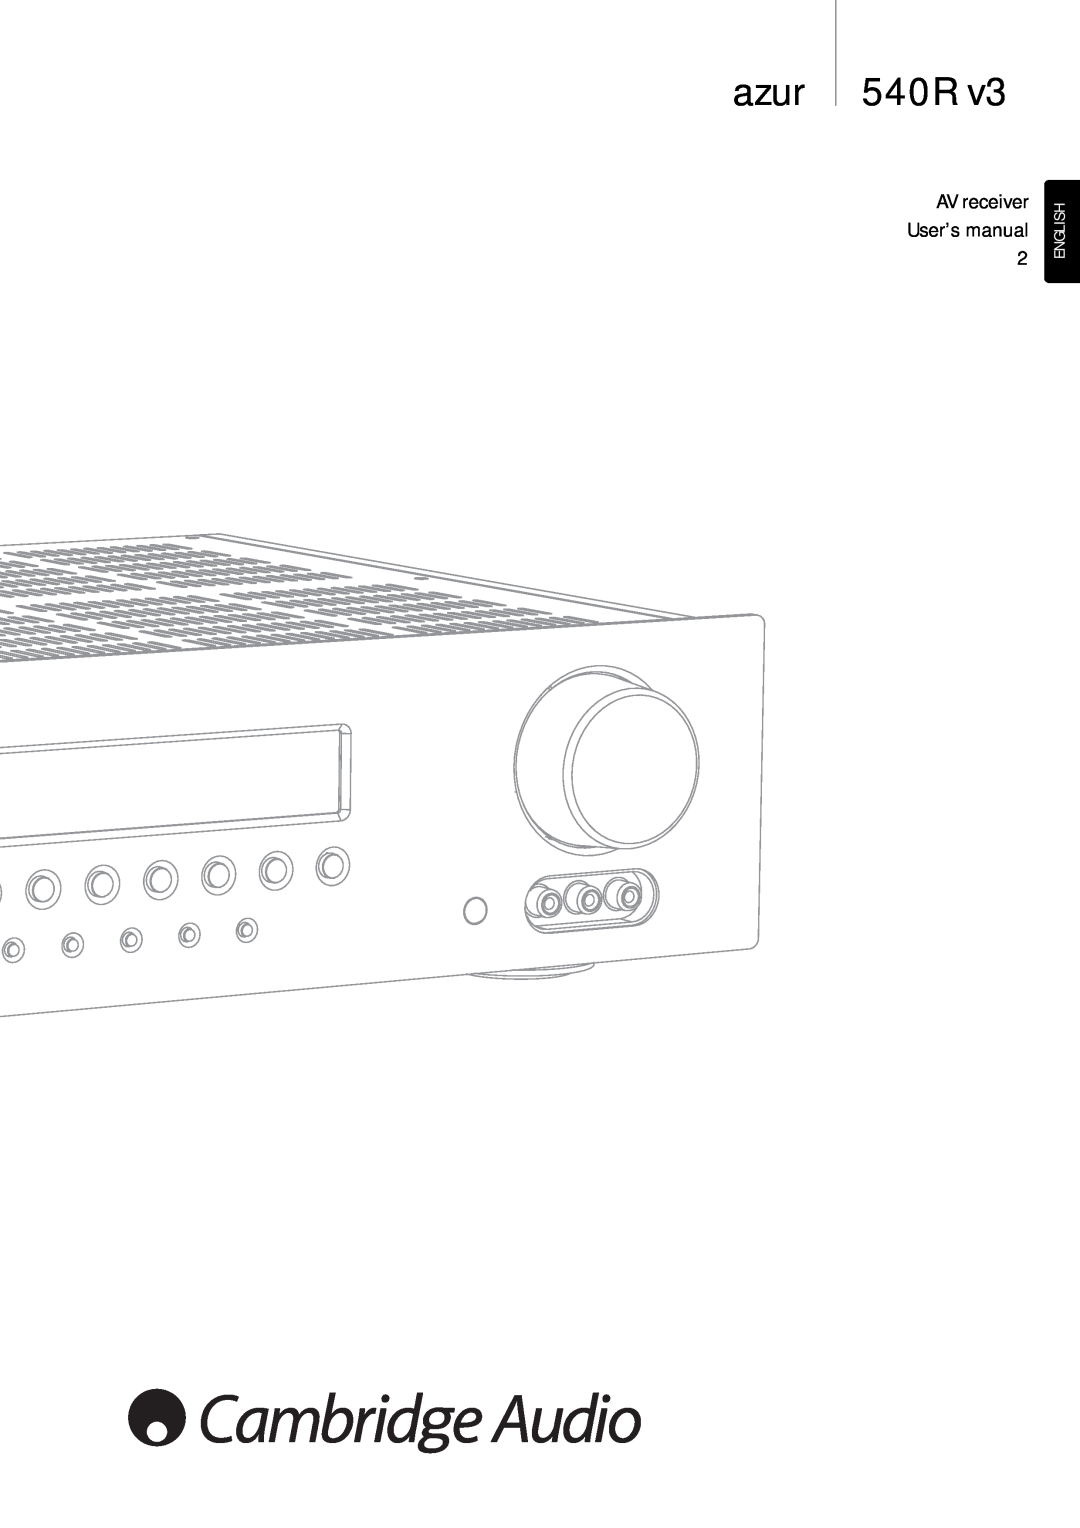 Cambridge Audio 540R V3 user manual azur 540R, English 